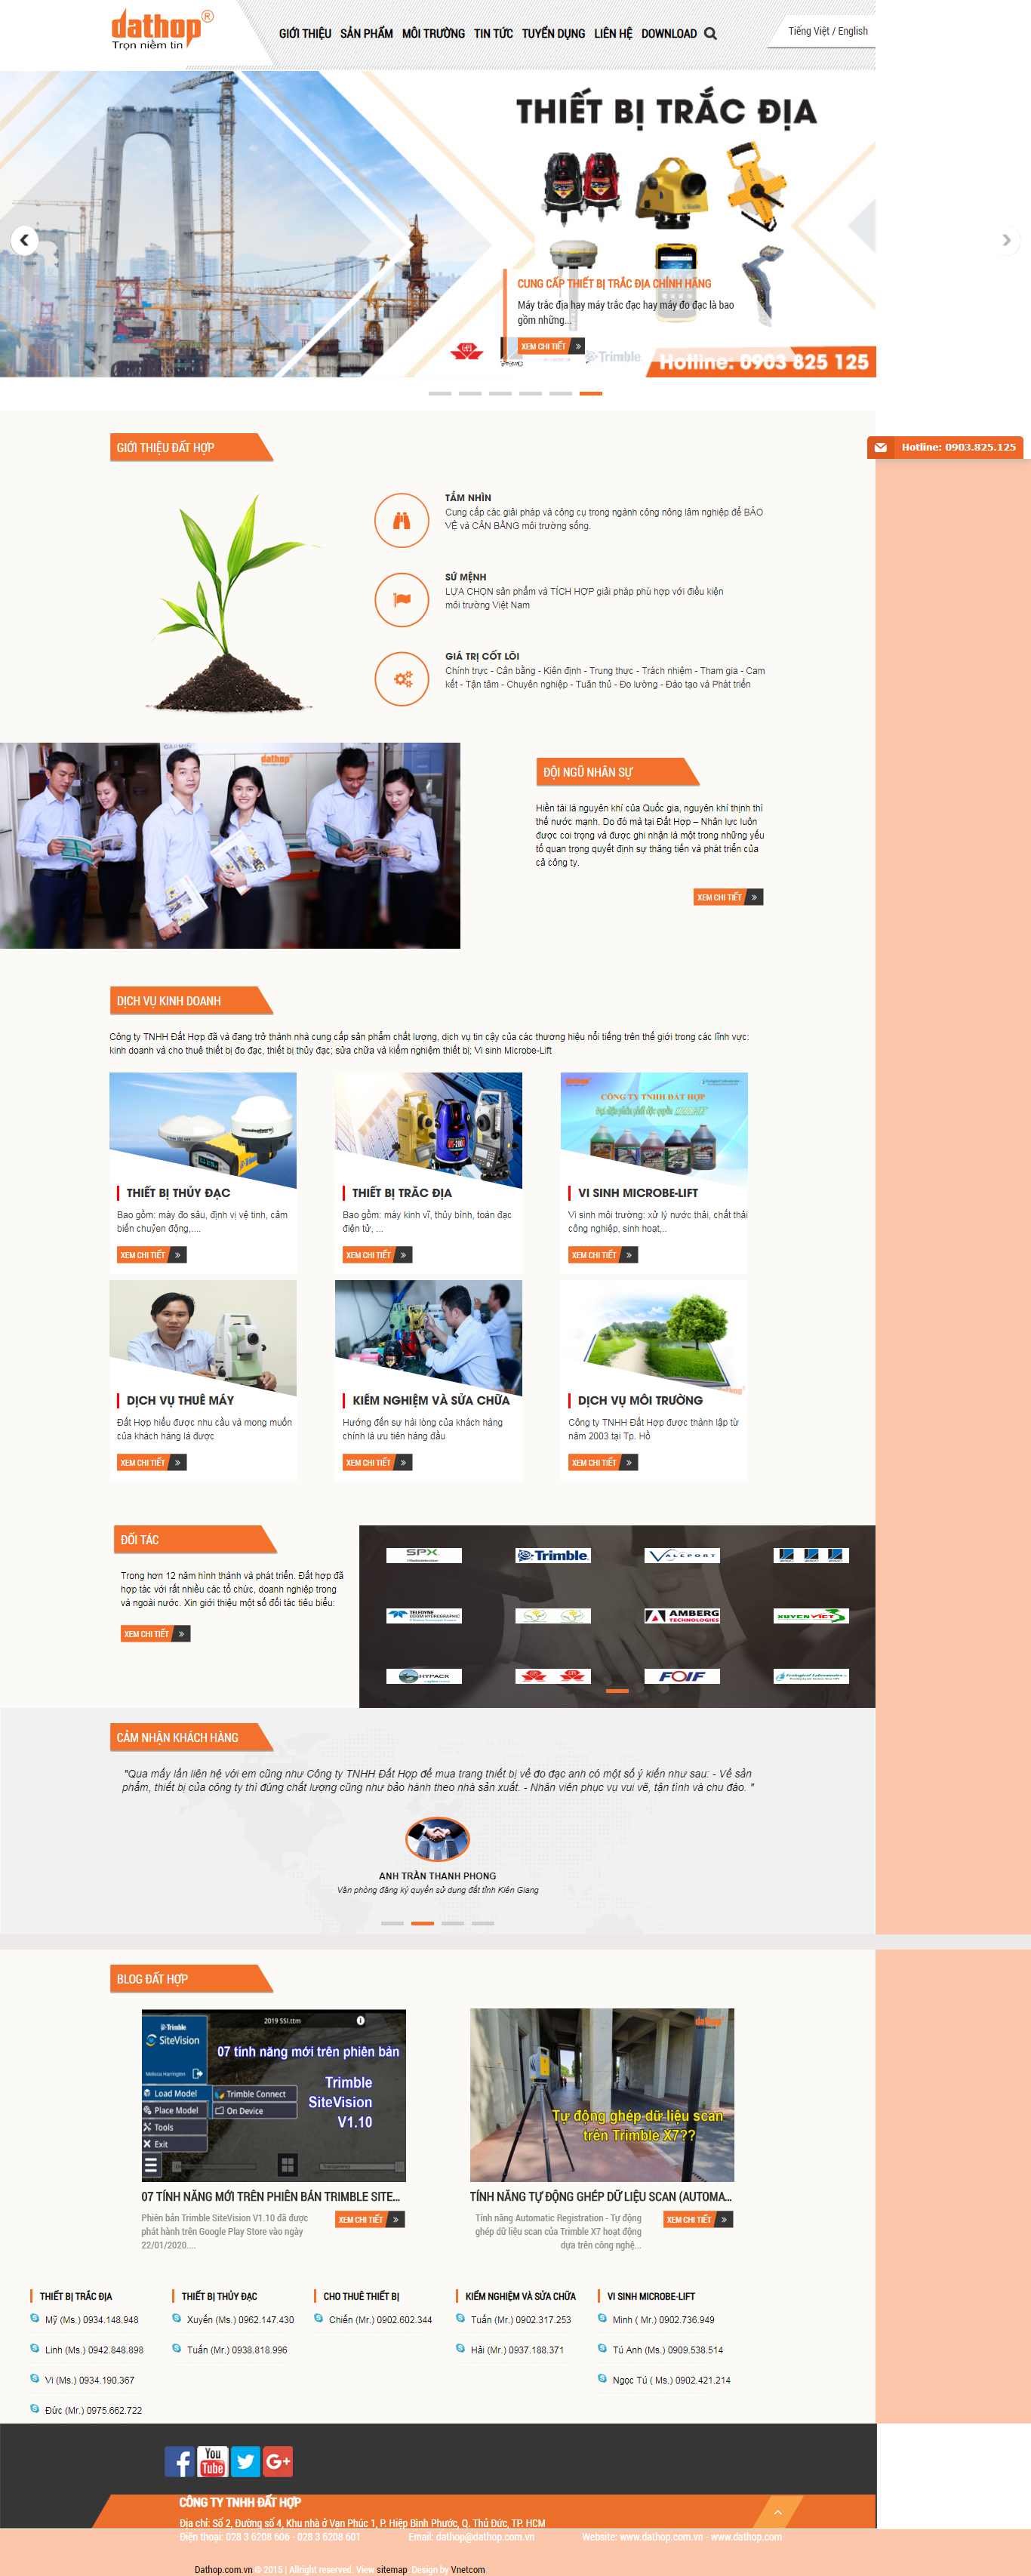 Thiết kế Website đồ trắc địa - dathop.com.vn